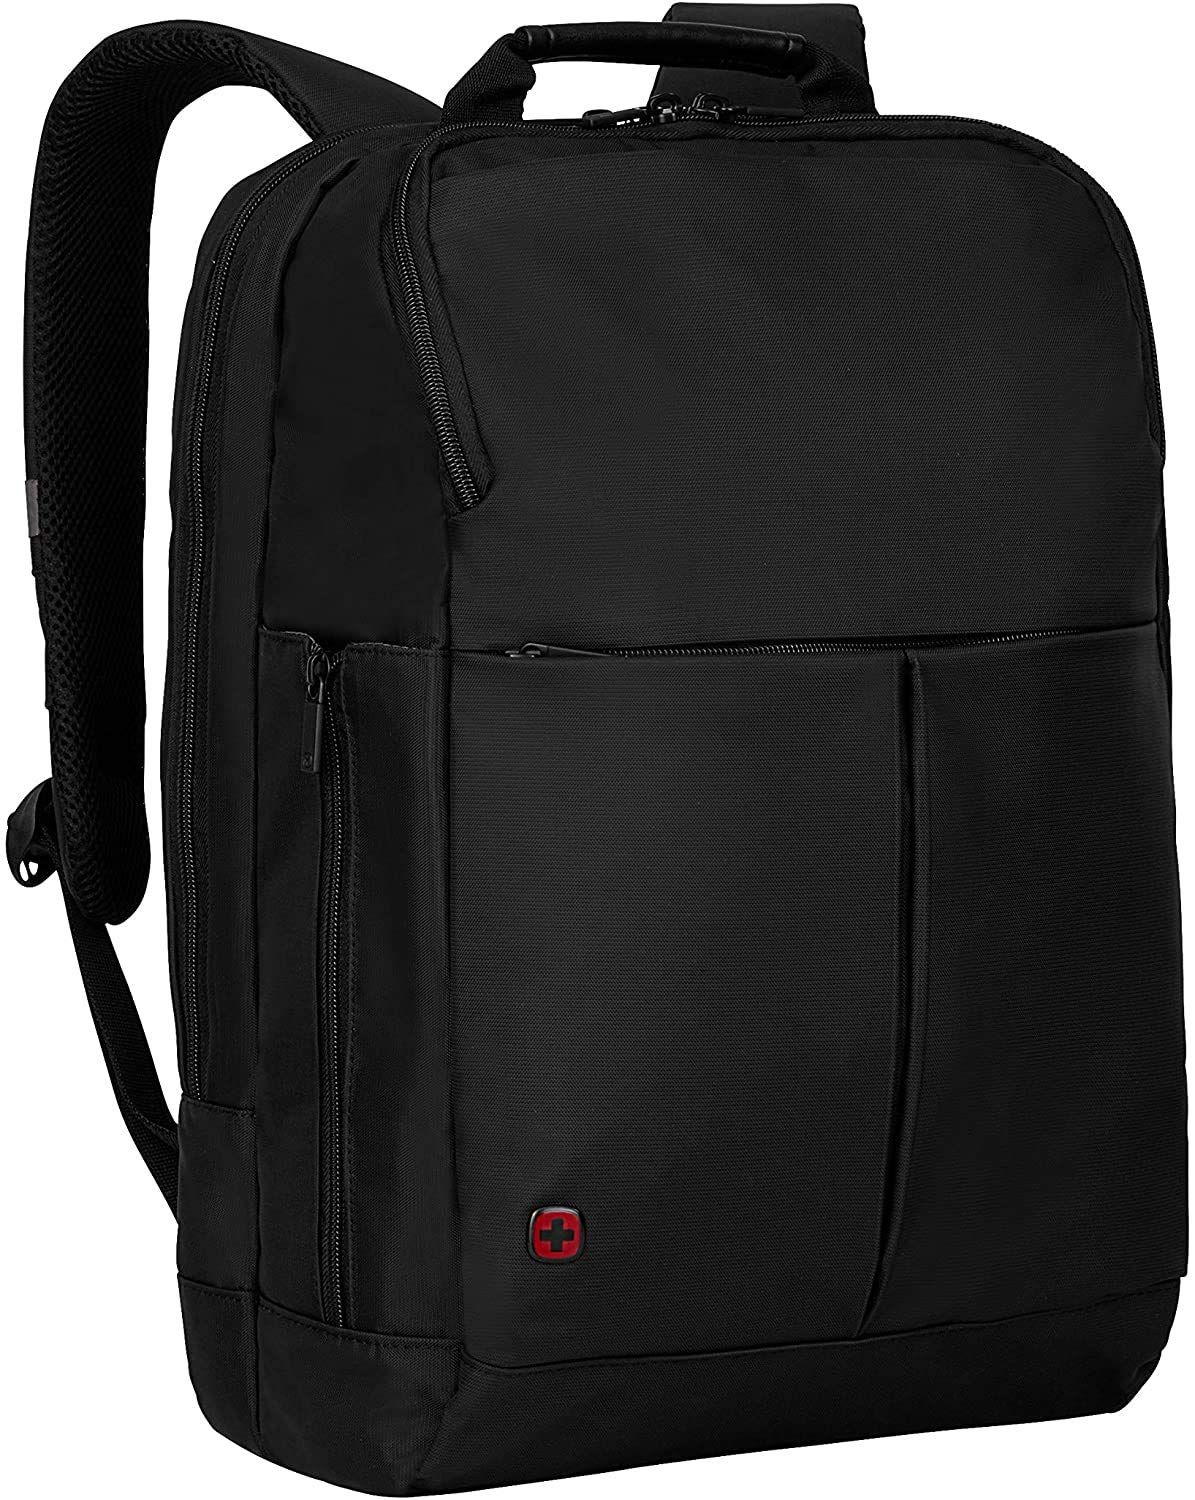 Wenger Reload 14 inch Laptop Backpack with Tablet Pocket, Gray_1